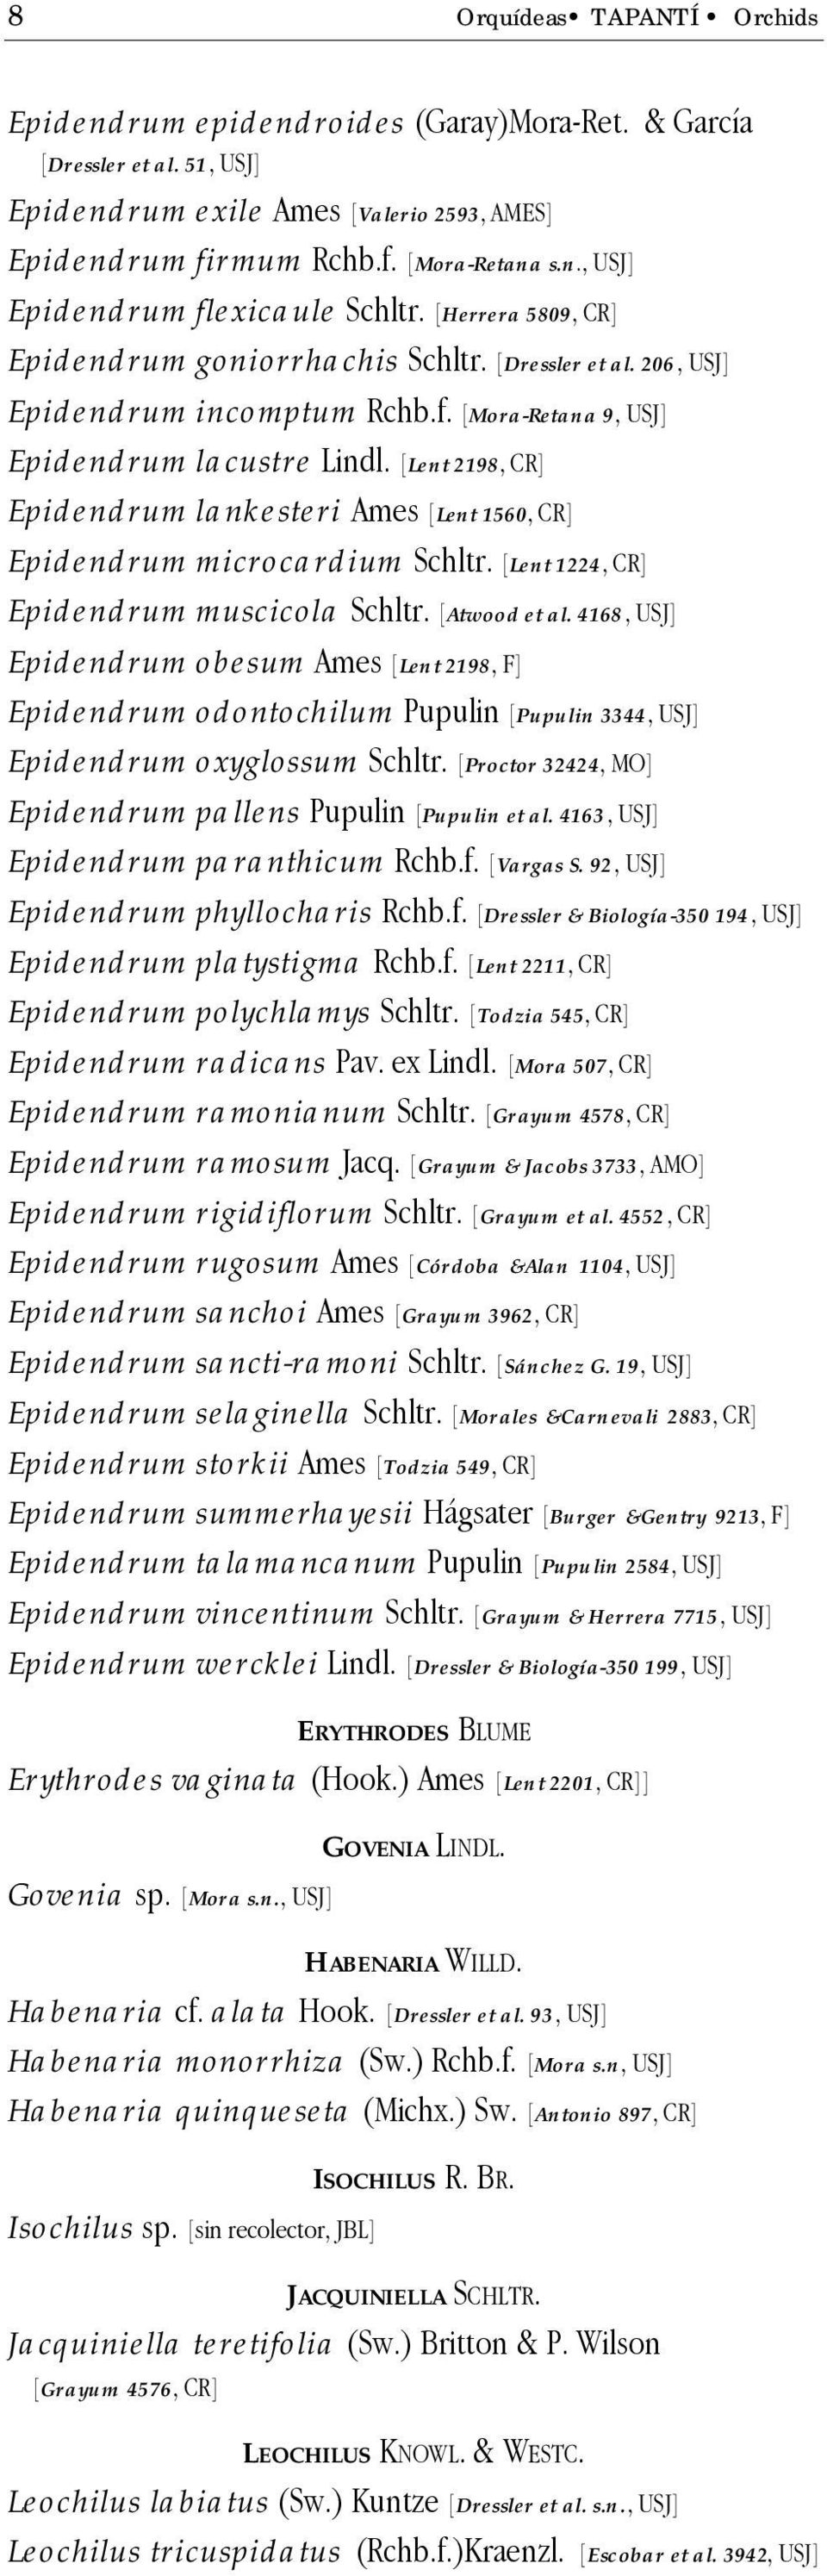 [Lent 2198, CR] Epidendrum lankesteri Ames [Lent 1560, CR] Epidendrum microcardium Schltr. [Lent 1224, CR] Epidendrum muscicola Schltr. [Atwood et al.